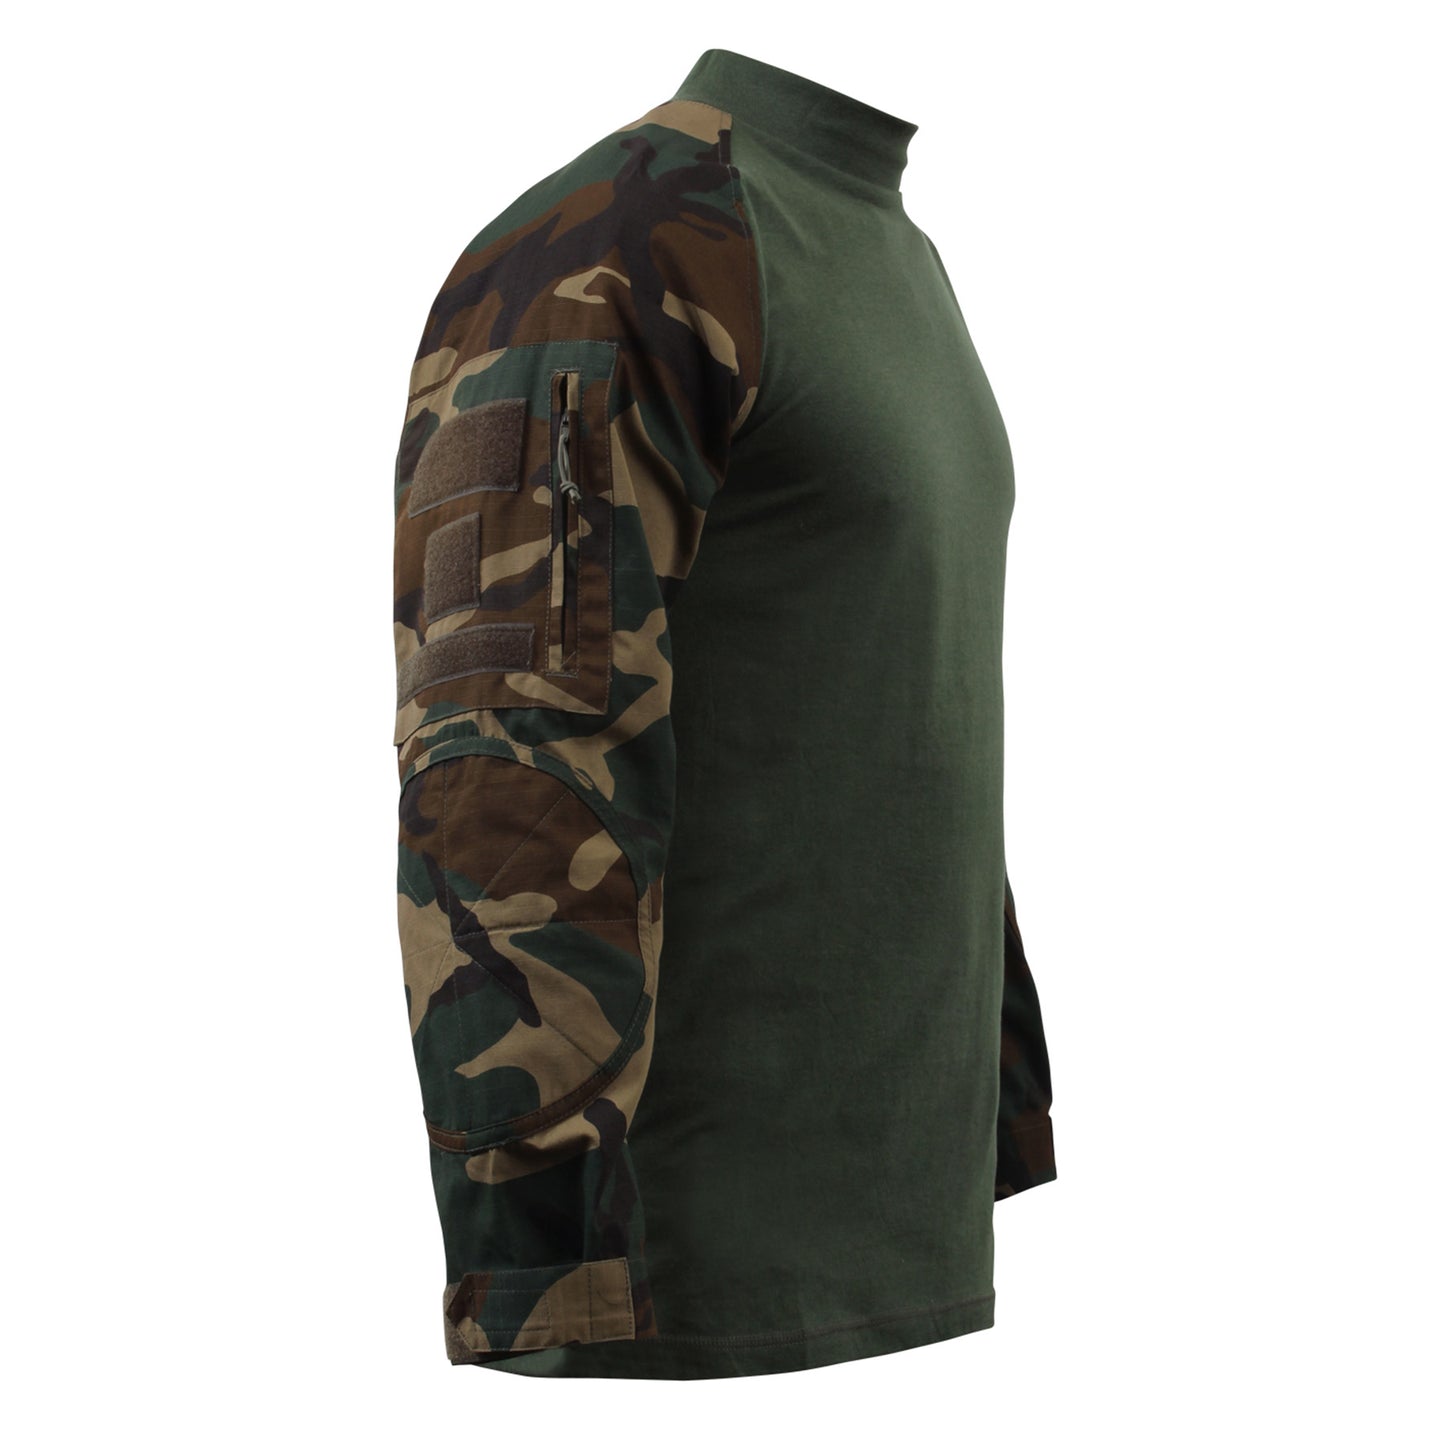 Rothco Tactical Airsoft Combat Shirt - Woodland Camo